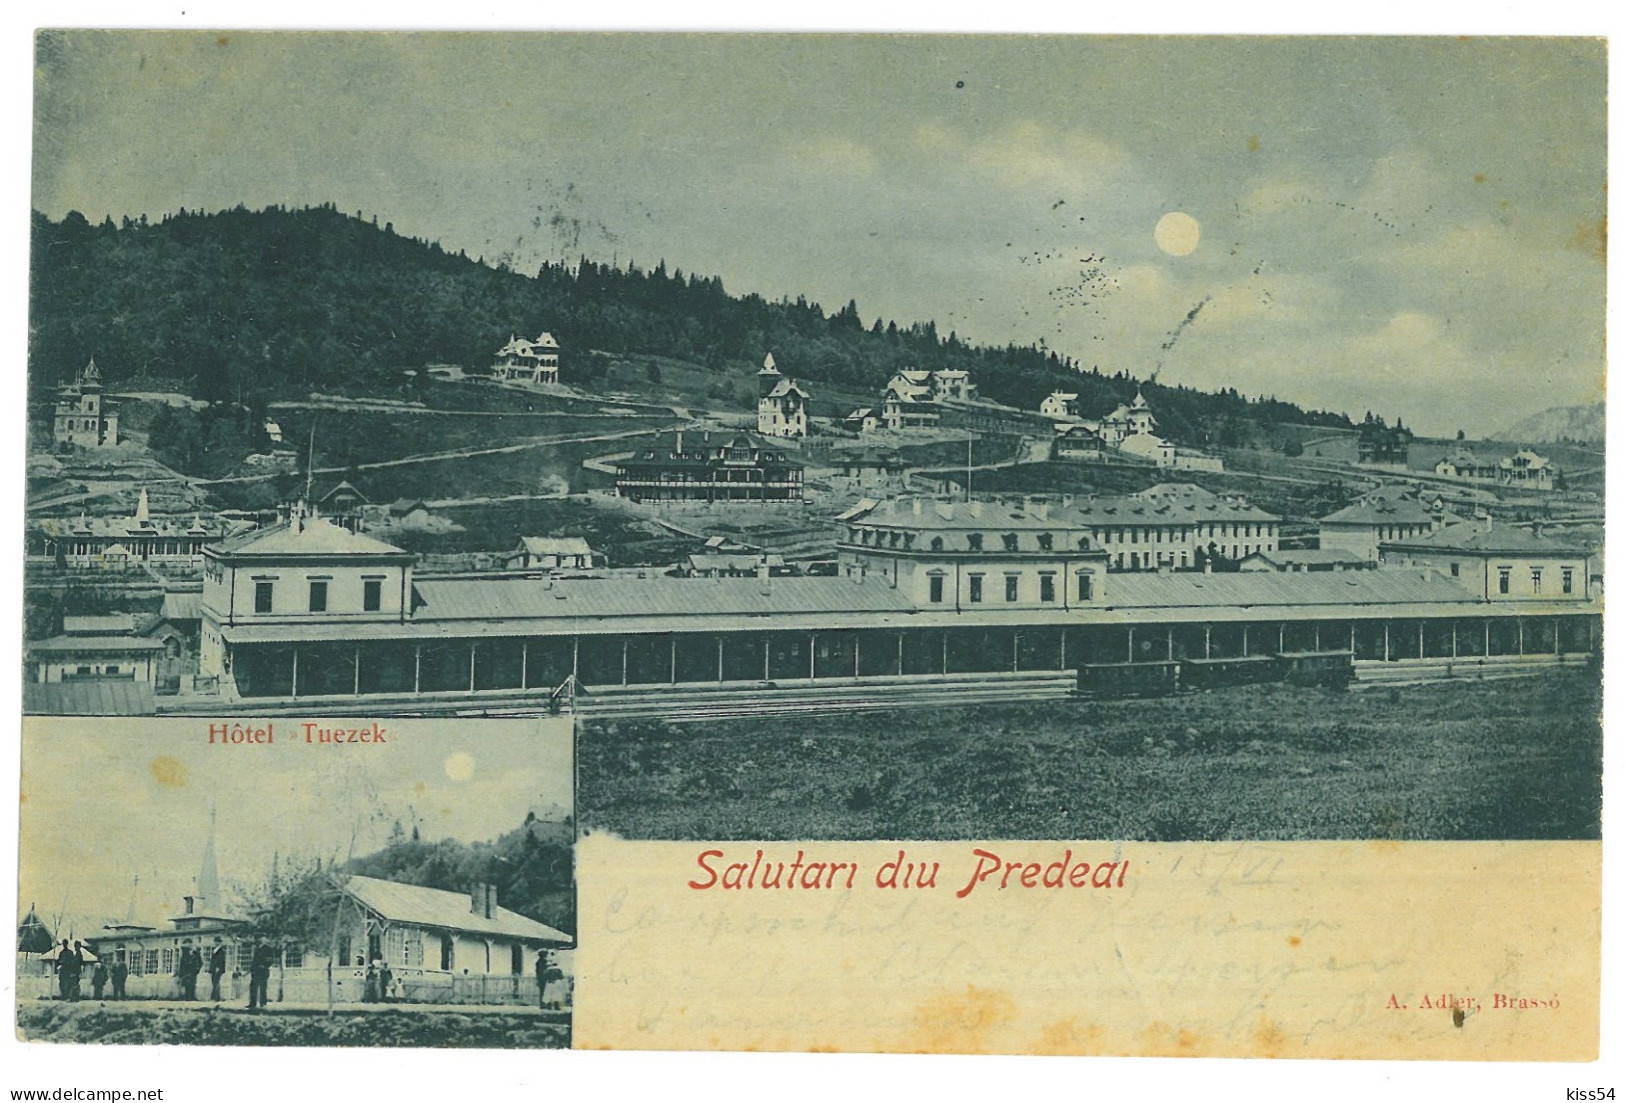 RO 77 - 23756 PREDEAL, Brasov, Railway Station, Litho, Romania - Old Postcard - Used - 1899 - Rumänien